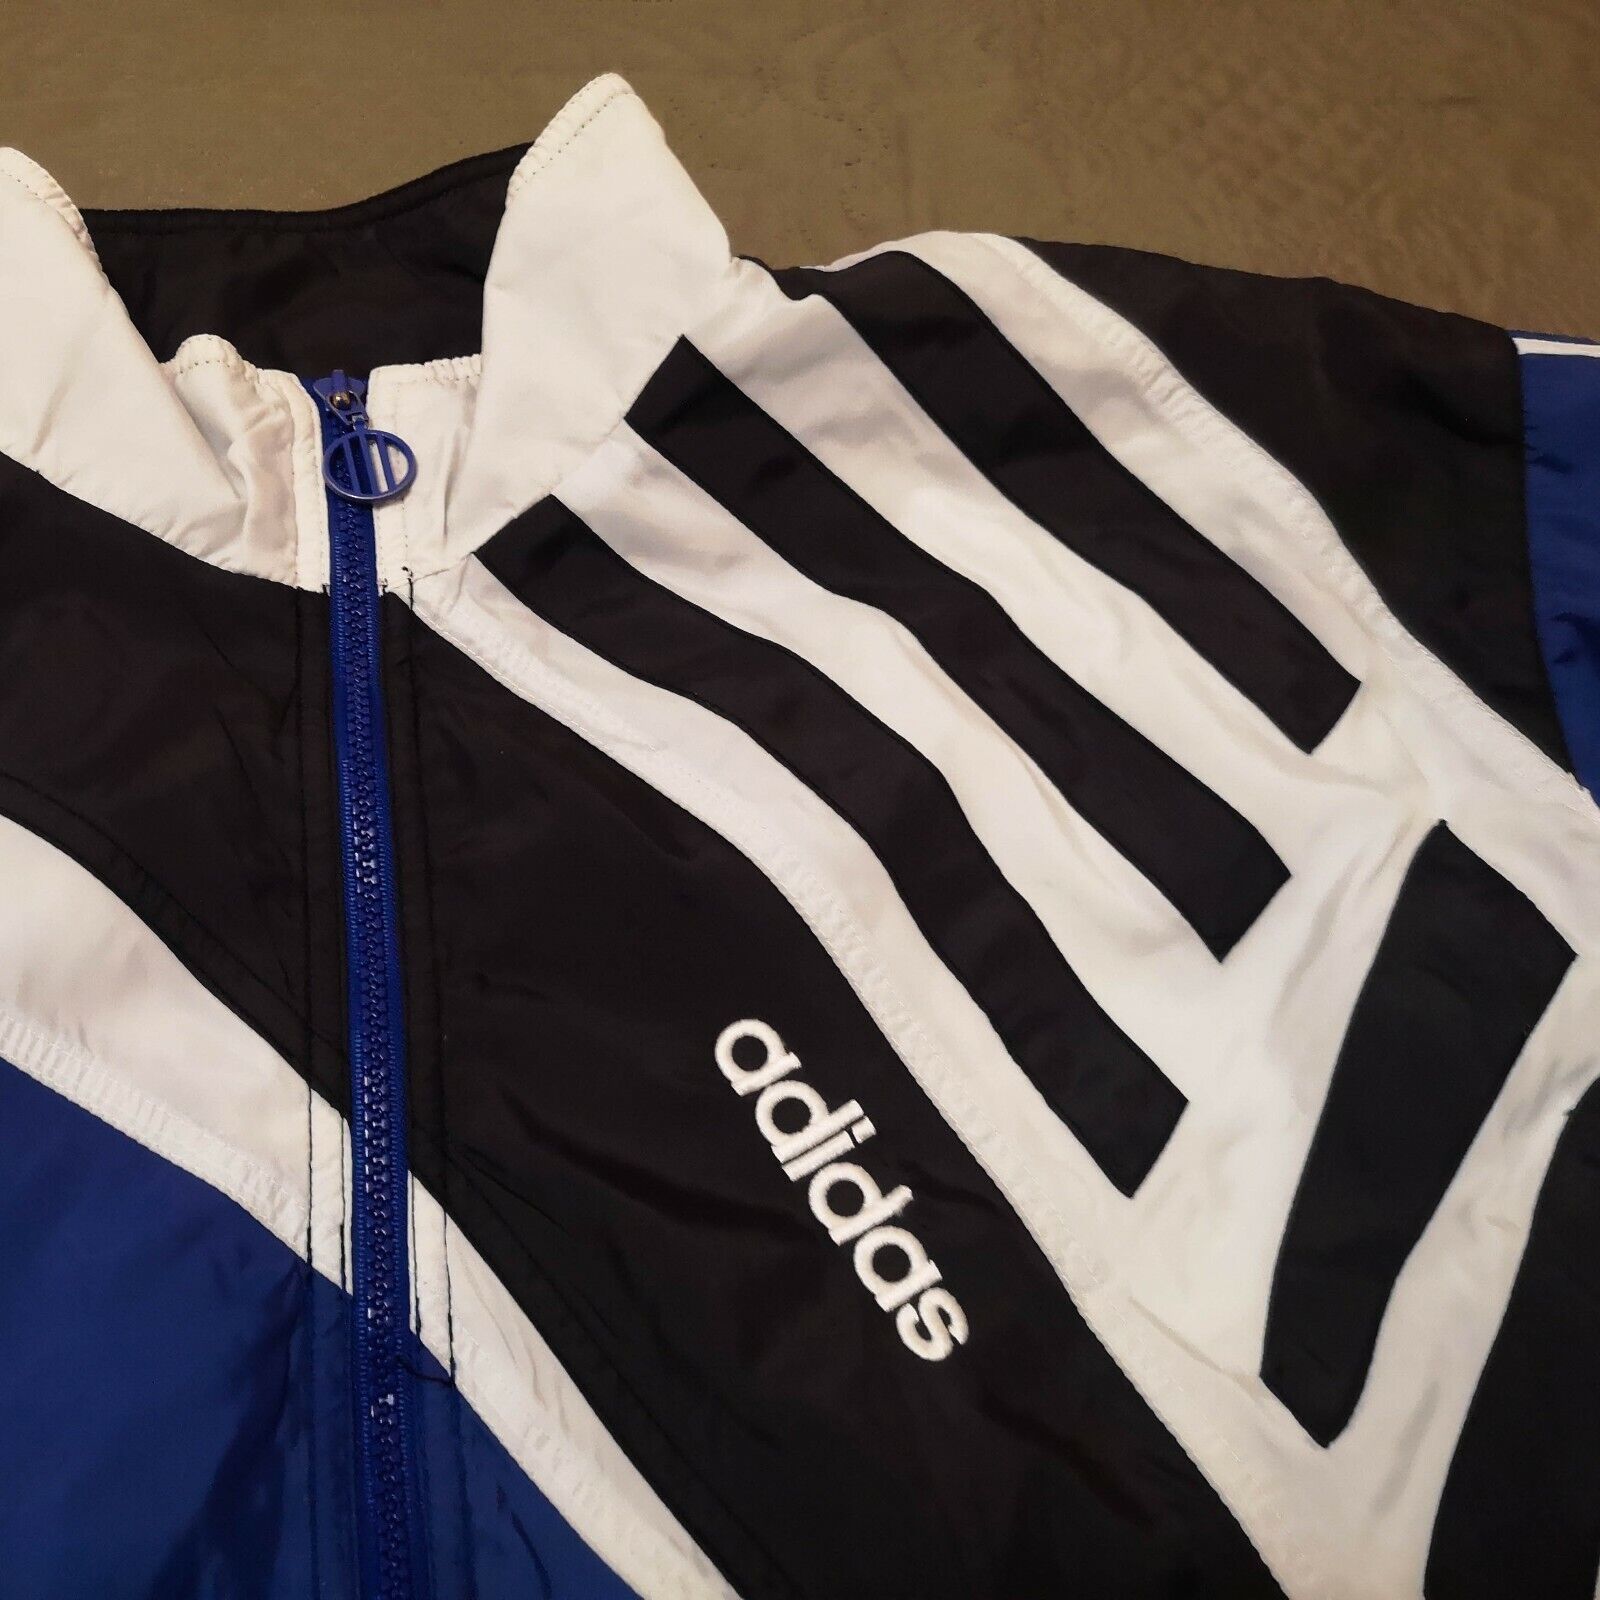 Oferta tuberculosis cayó rare vintage Adidas track jacket shiny nylon Size M adi multi color D6 F180  | eBay